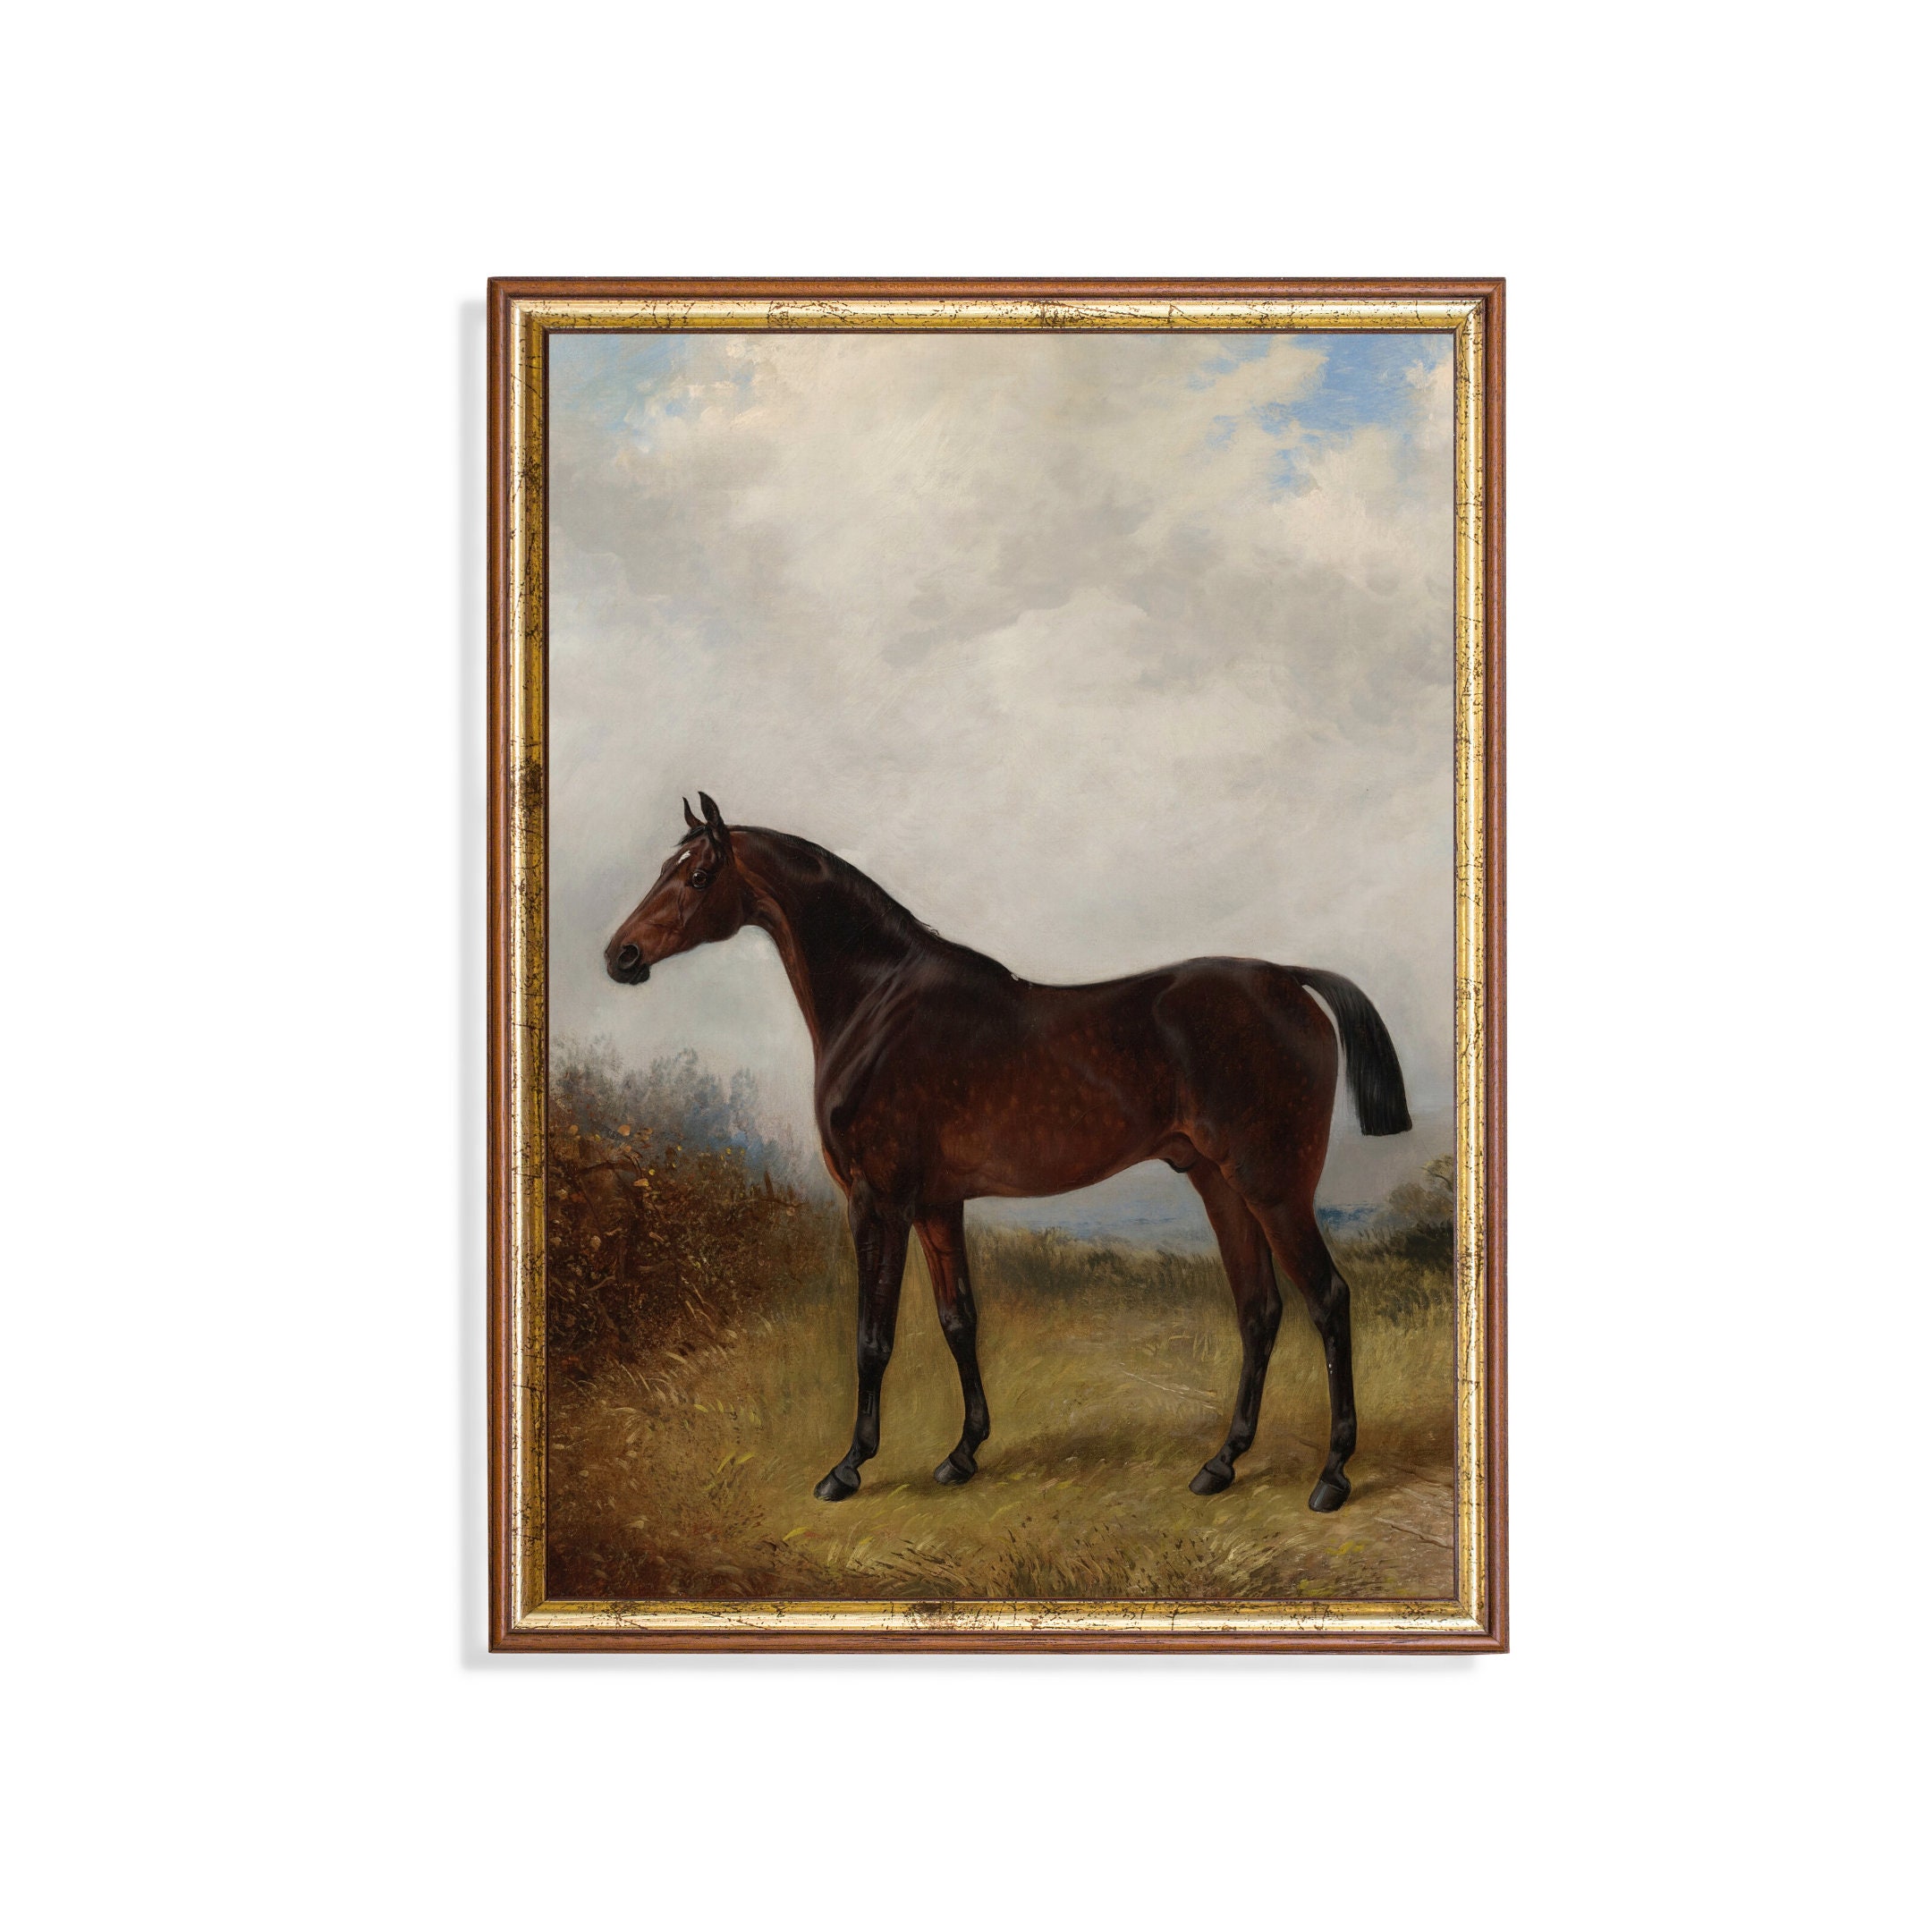 Beautiful Horses Art Canvas -16x20 - 12x16 - 8x10 - 20x16 - 16x12 -  10x8-Gift -Landscape Canvas Print or Portrait Canvas Print